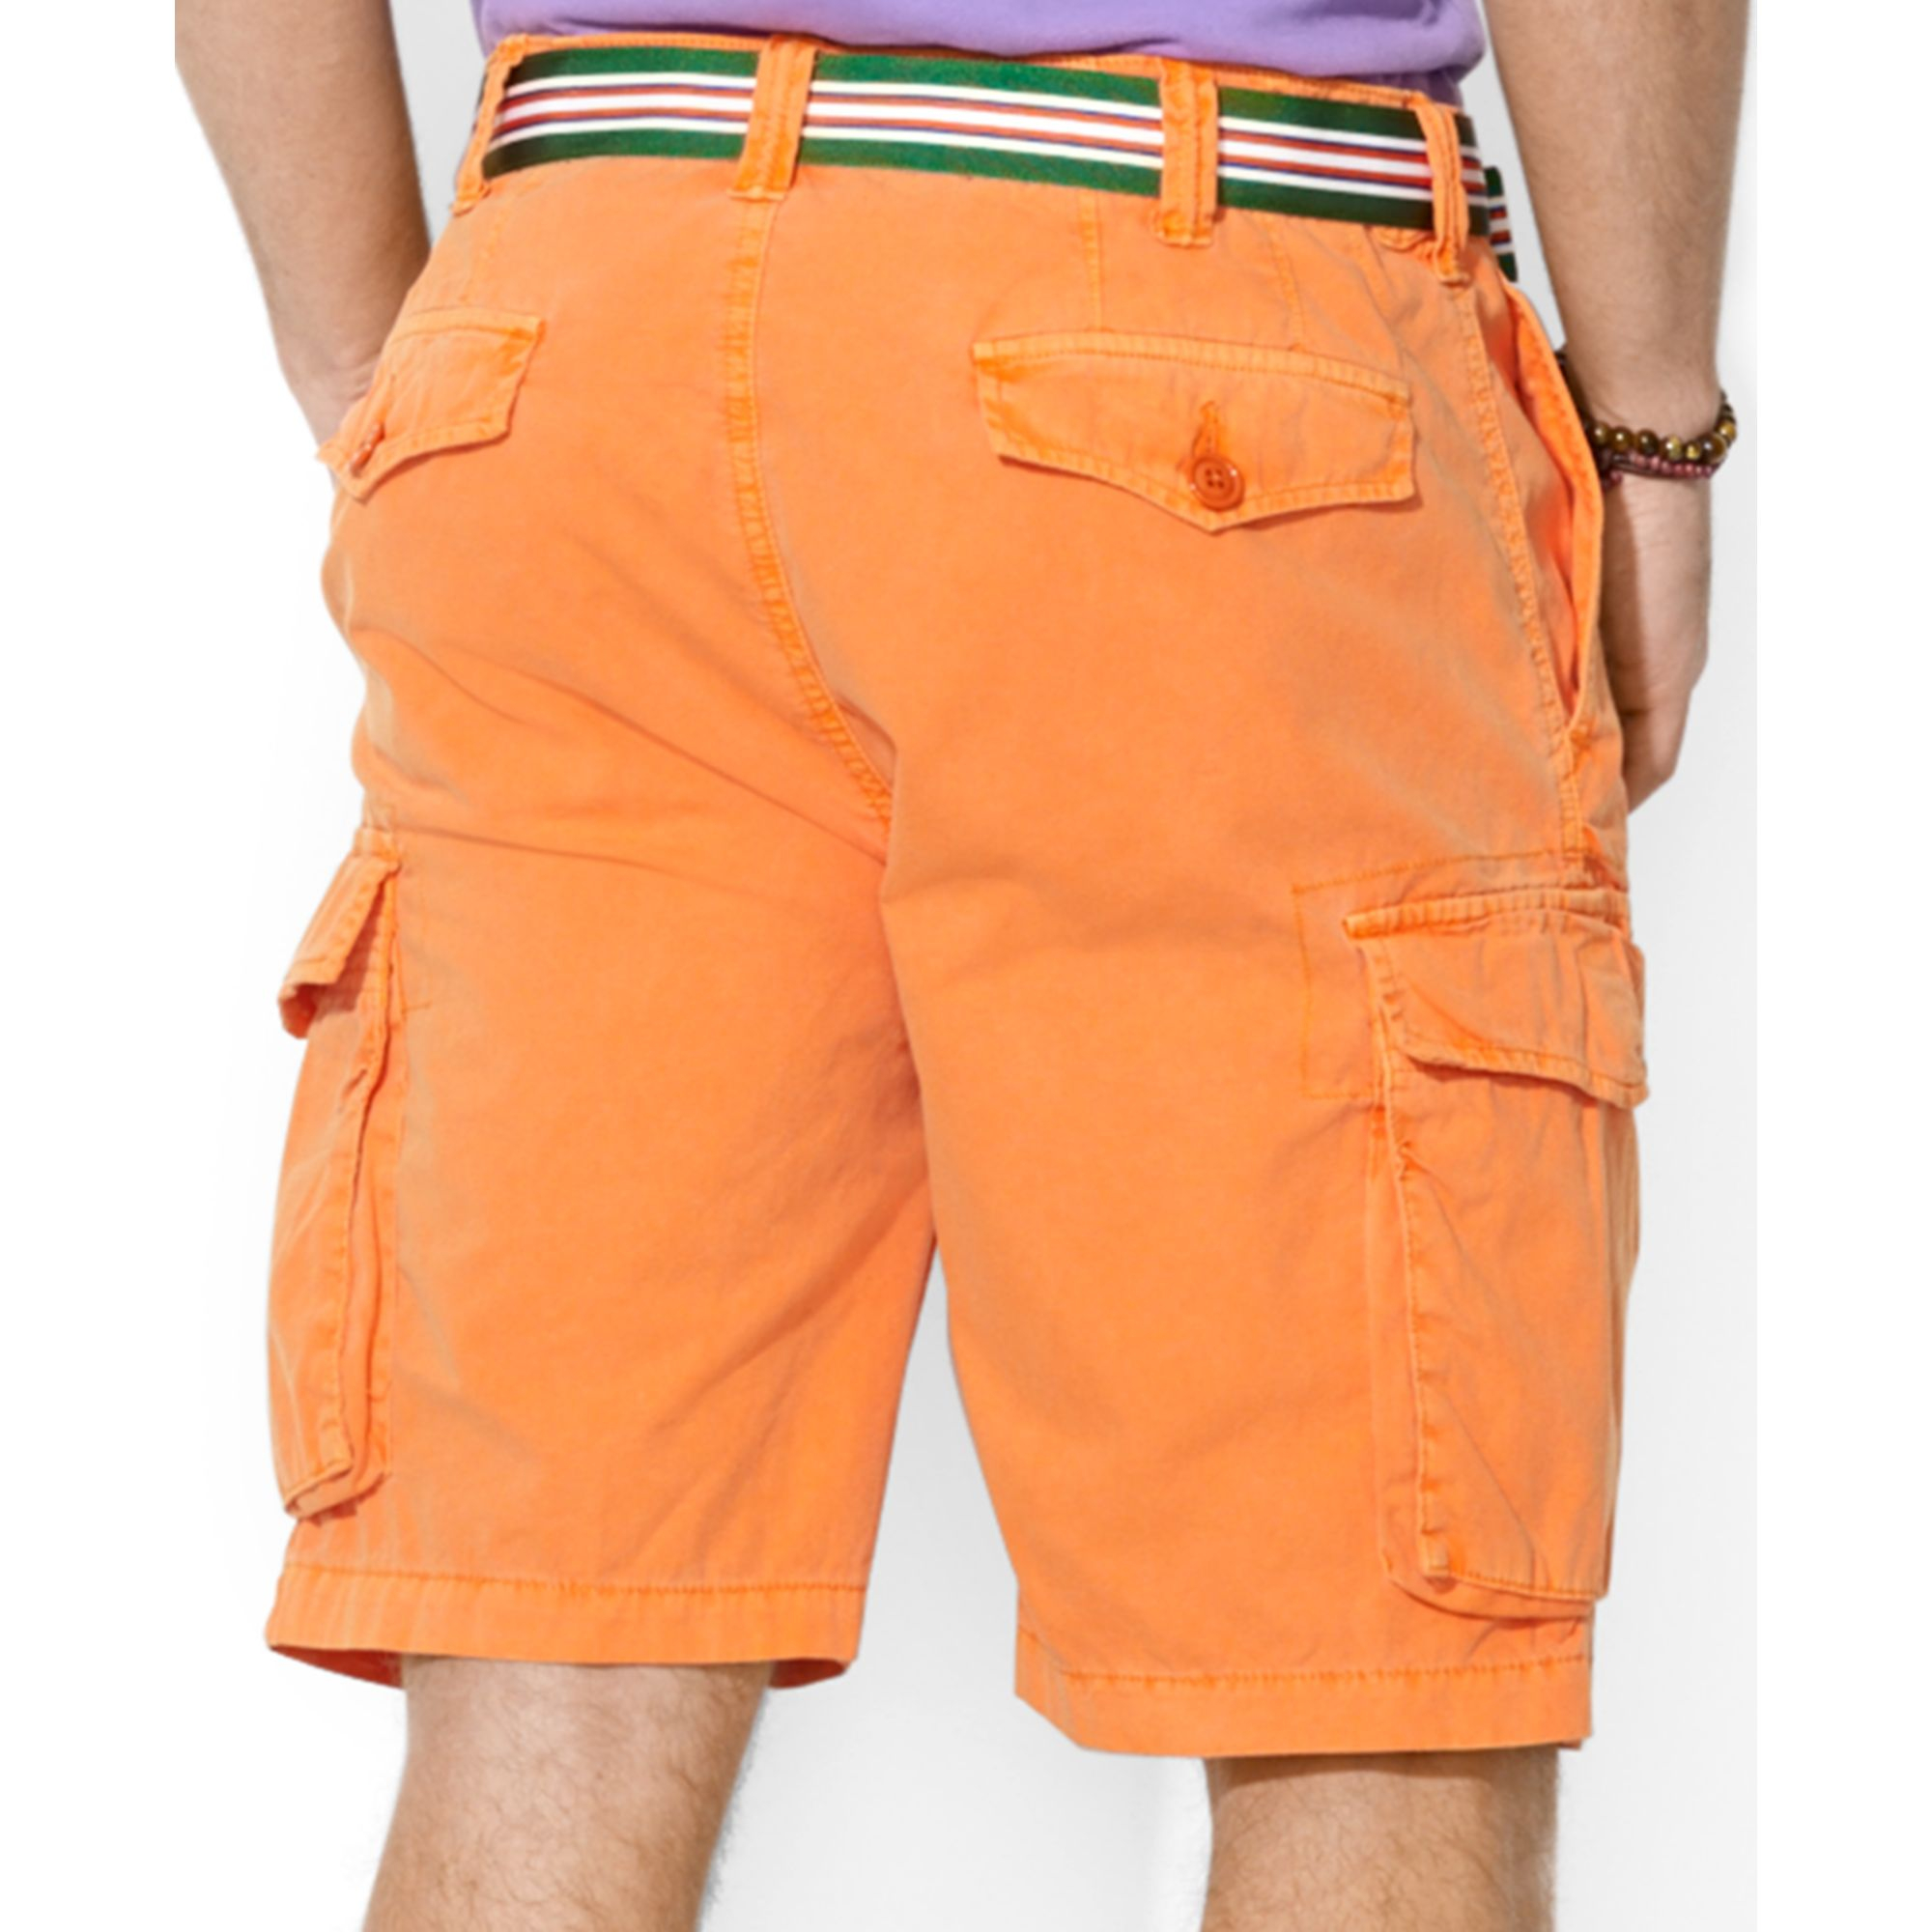 Ralph Lauren Polo Relaxedfit Corporal Cargo Shorts in Orange for Men - Lyst